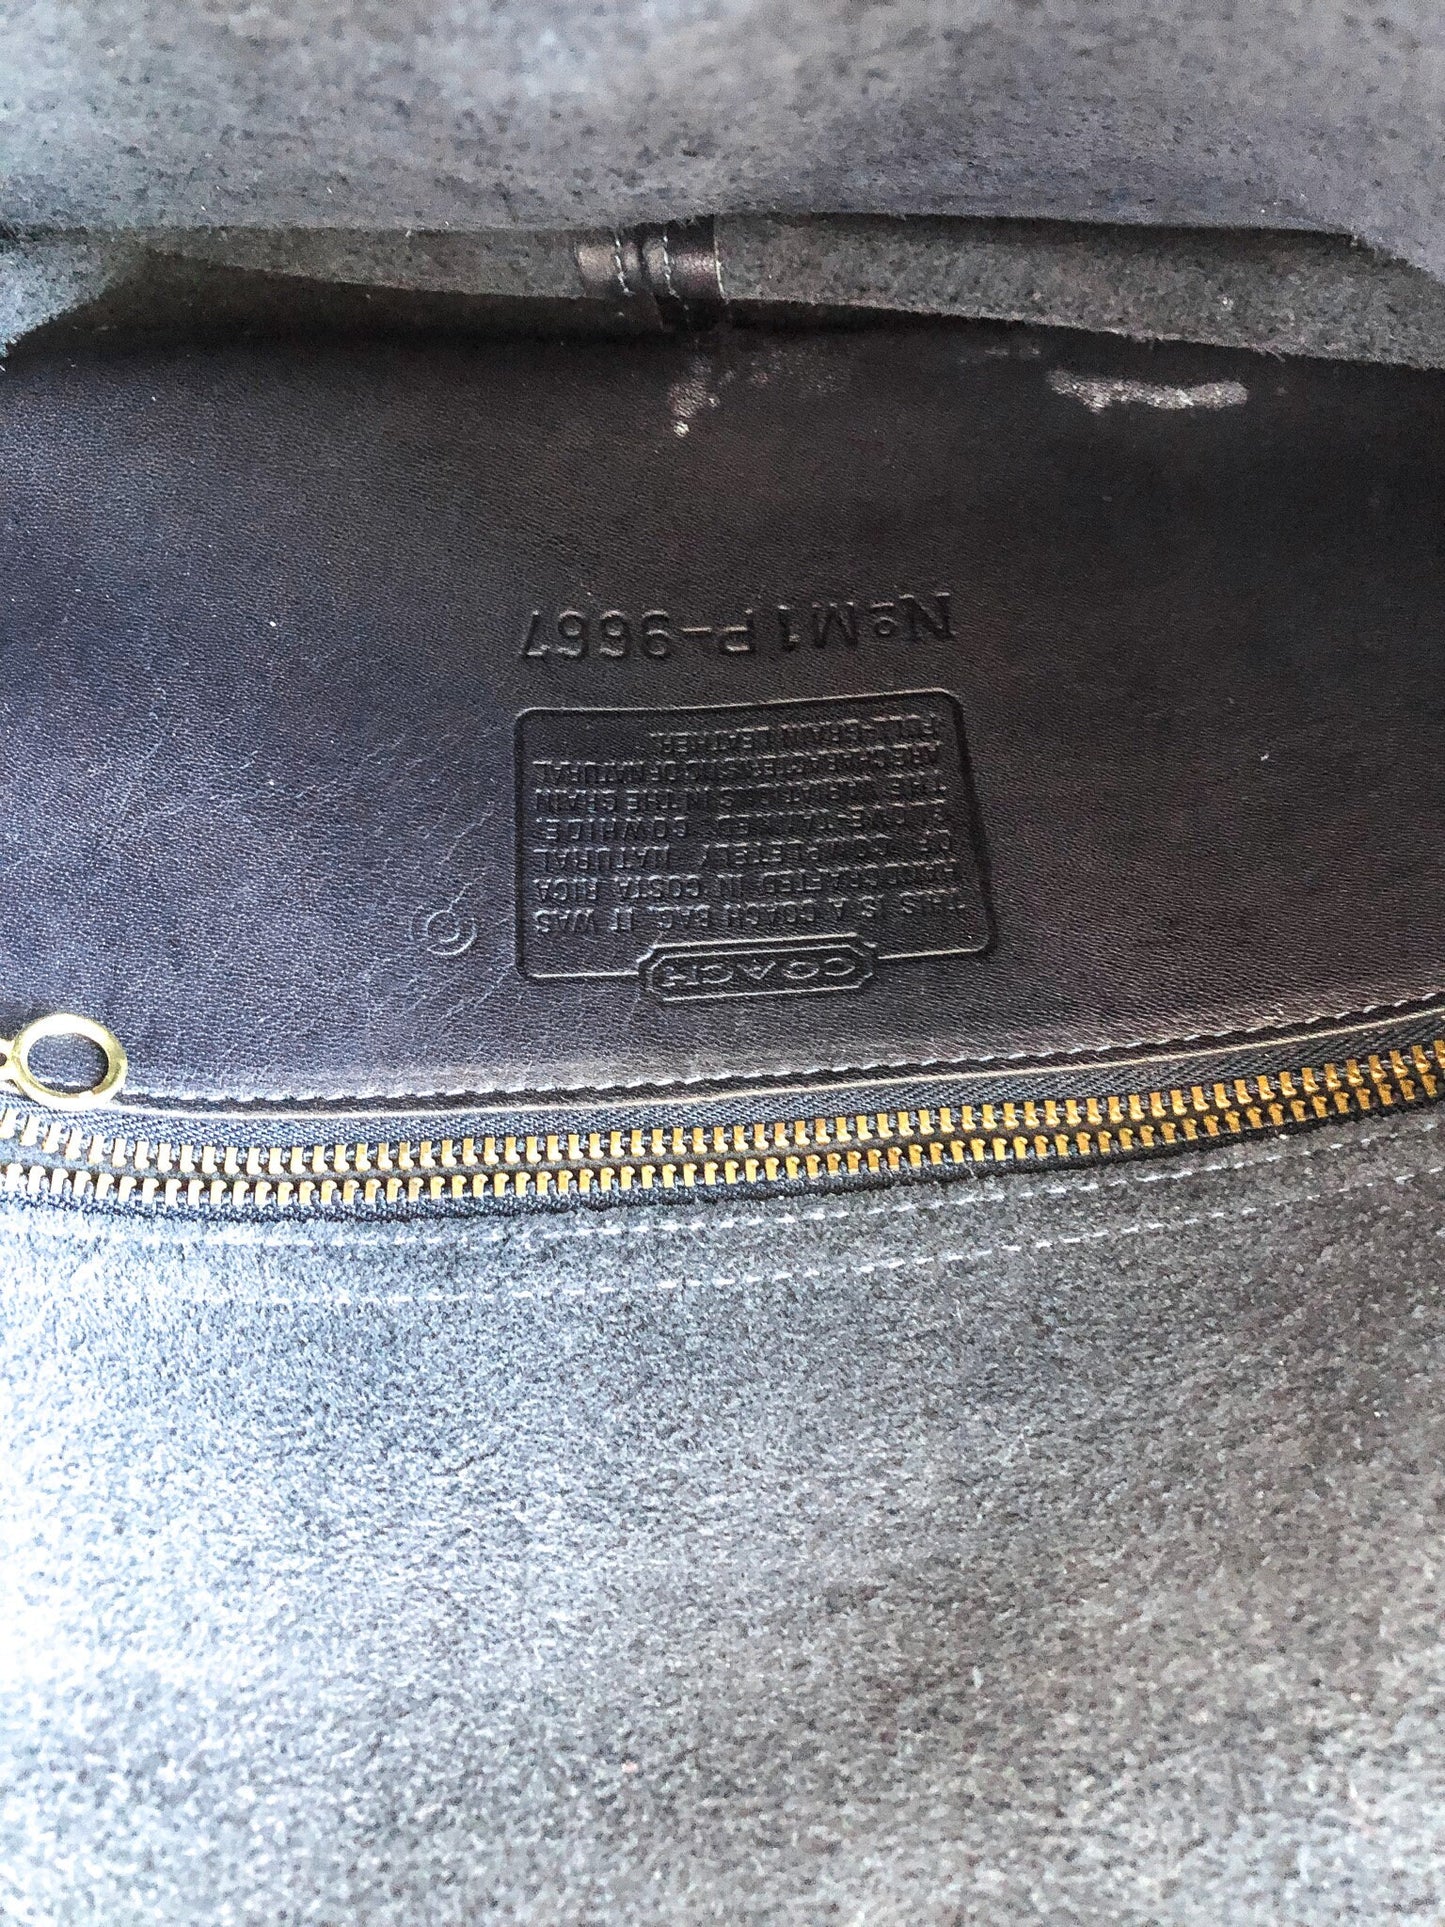 Vintage COACH Spectator Navy and Bone/Off-White Leather Crossbody, Style #9667, Vintage 90s Coach Handbag